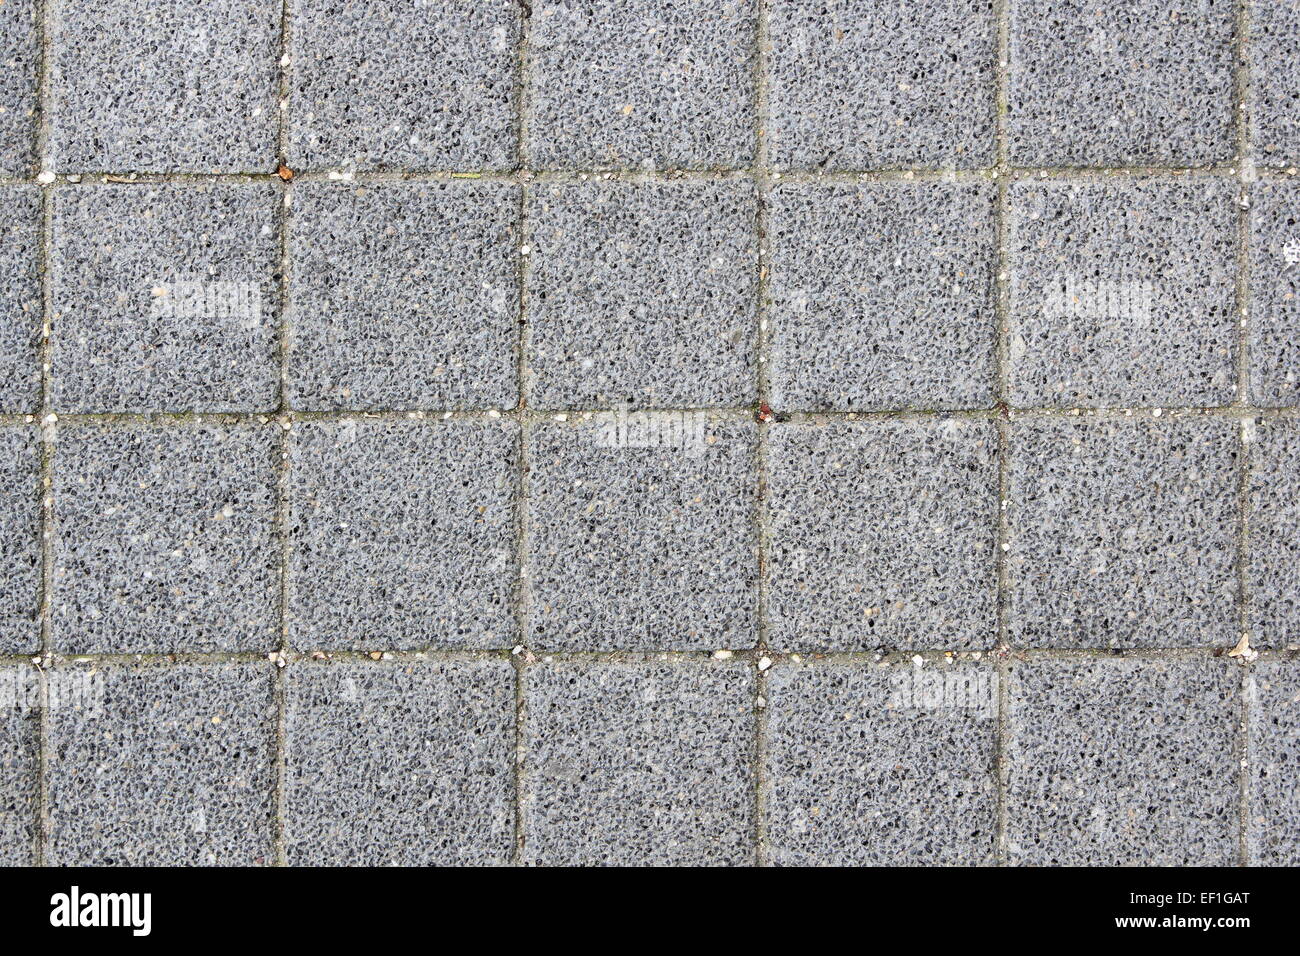 grey asphalt tiles texture on urban pedestrian path Stock Photo